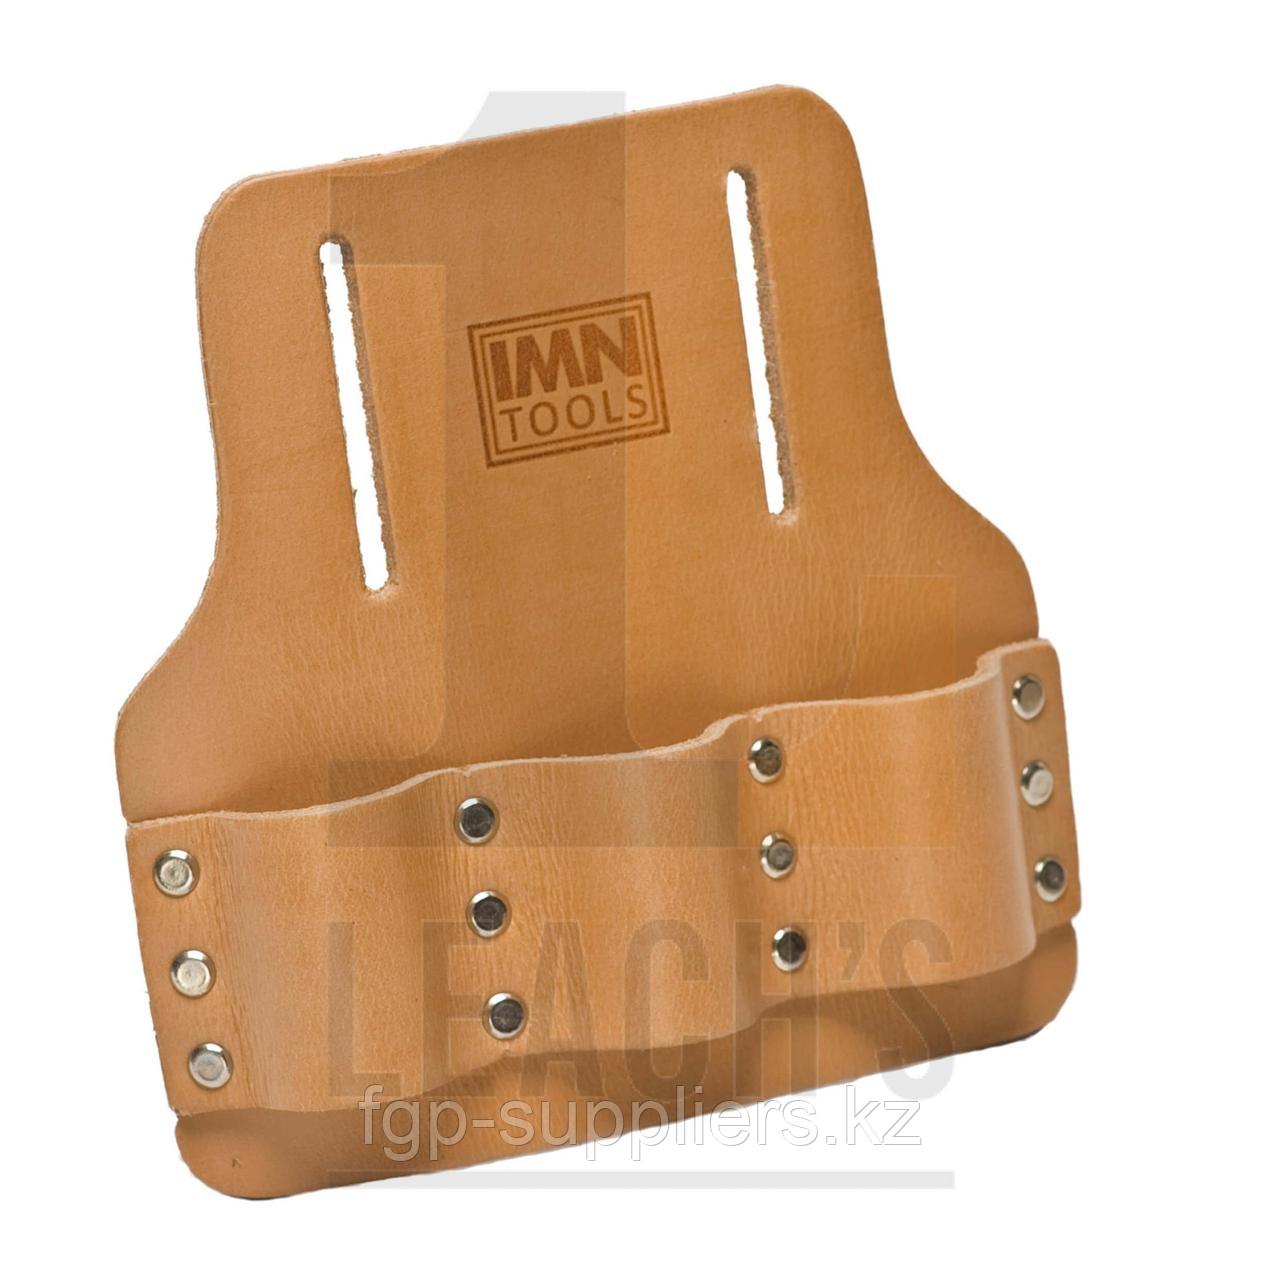 IMN Natural Leather Tripple Loop Spanner Holder / IMN Держатель с тремя петлями для гаечных ключей из натуральной кожи 